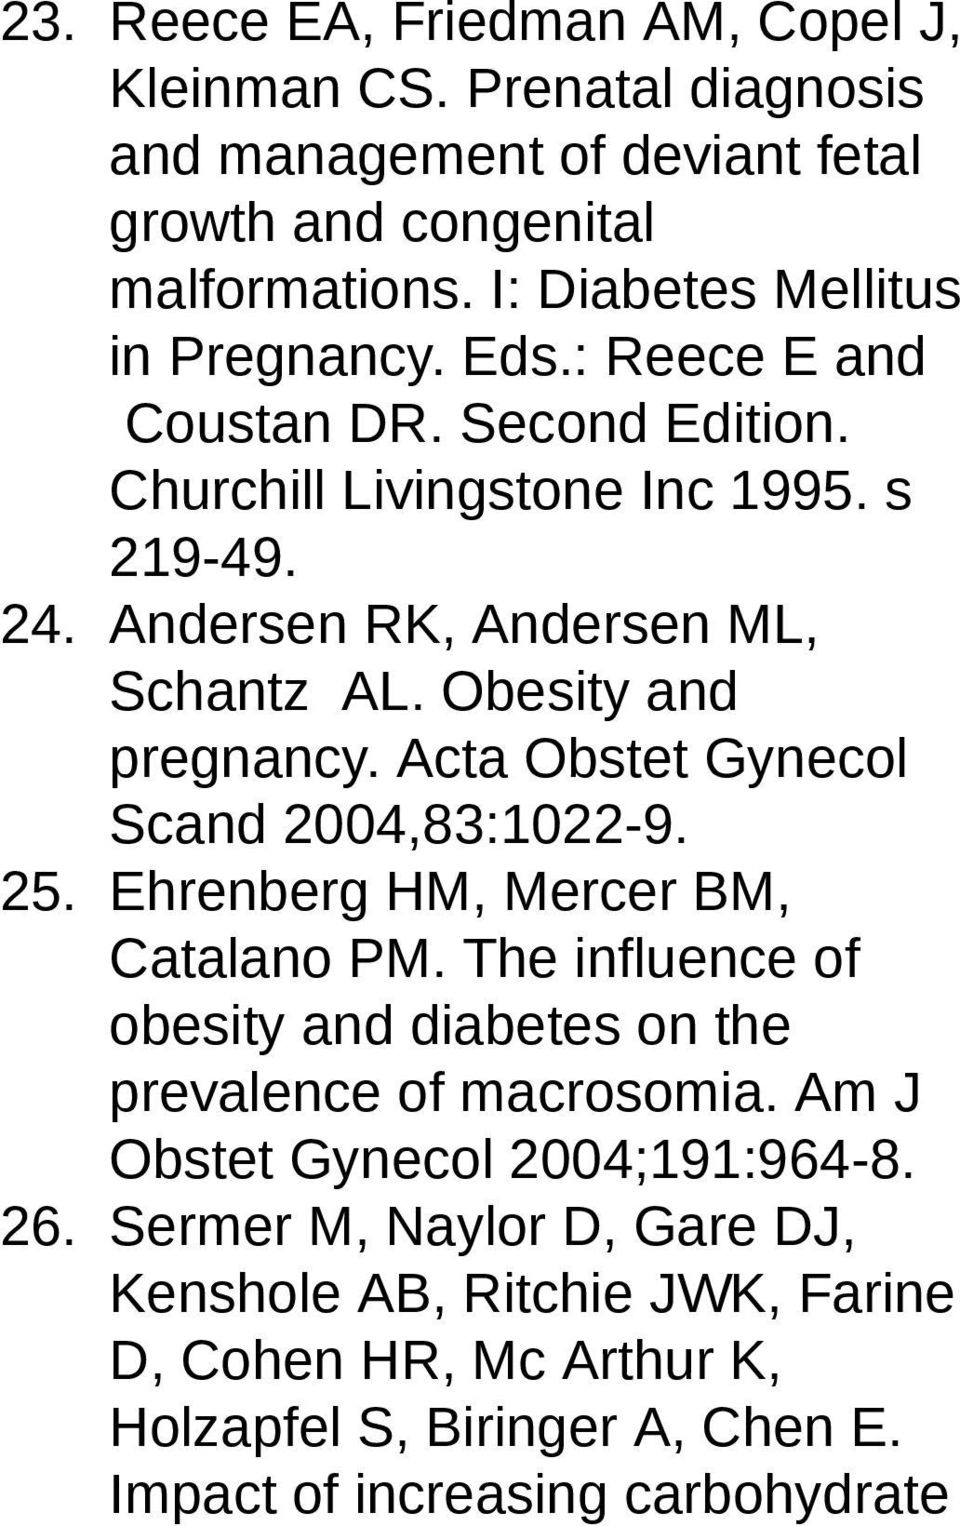 Obesity and pregnancy. Acta Obstet Gynecol Scand 2004,83:1022-9. 25. Ehrenberg HM, Mercer BM, Catalano PM.